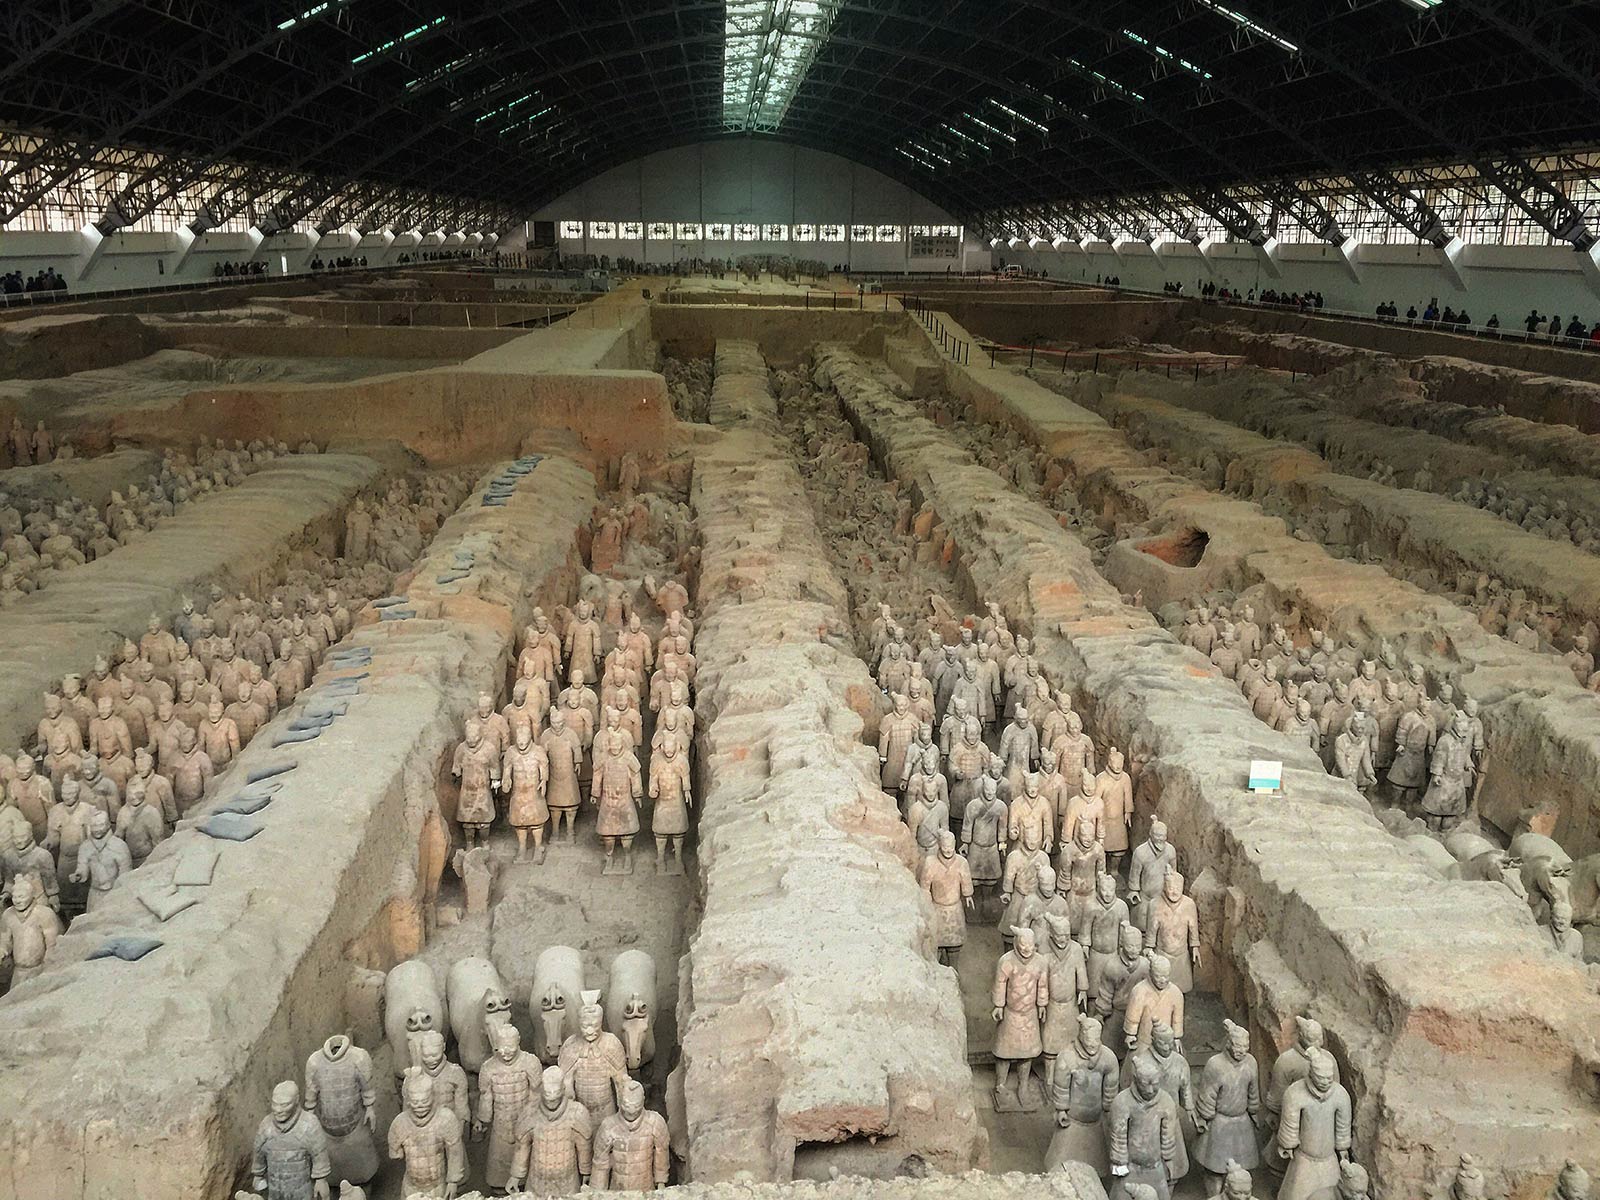 Terracotta warriors under a hangar in Xi'an, China. China Reflection